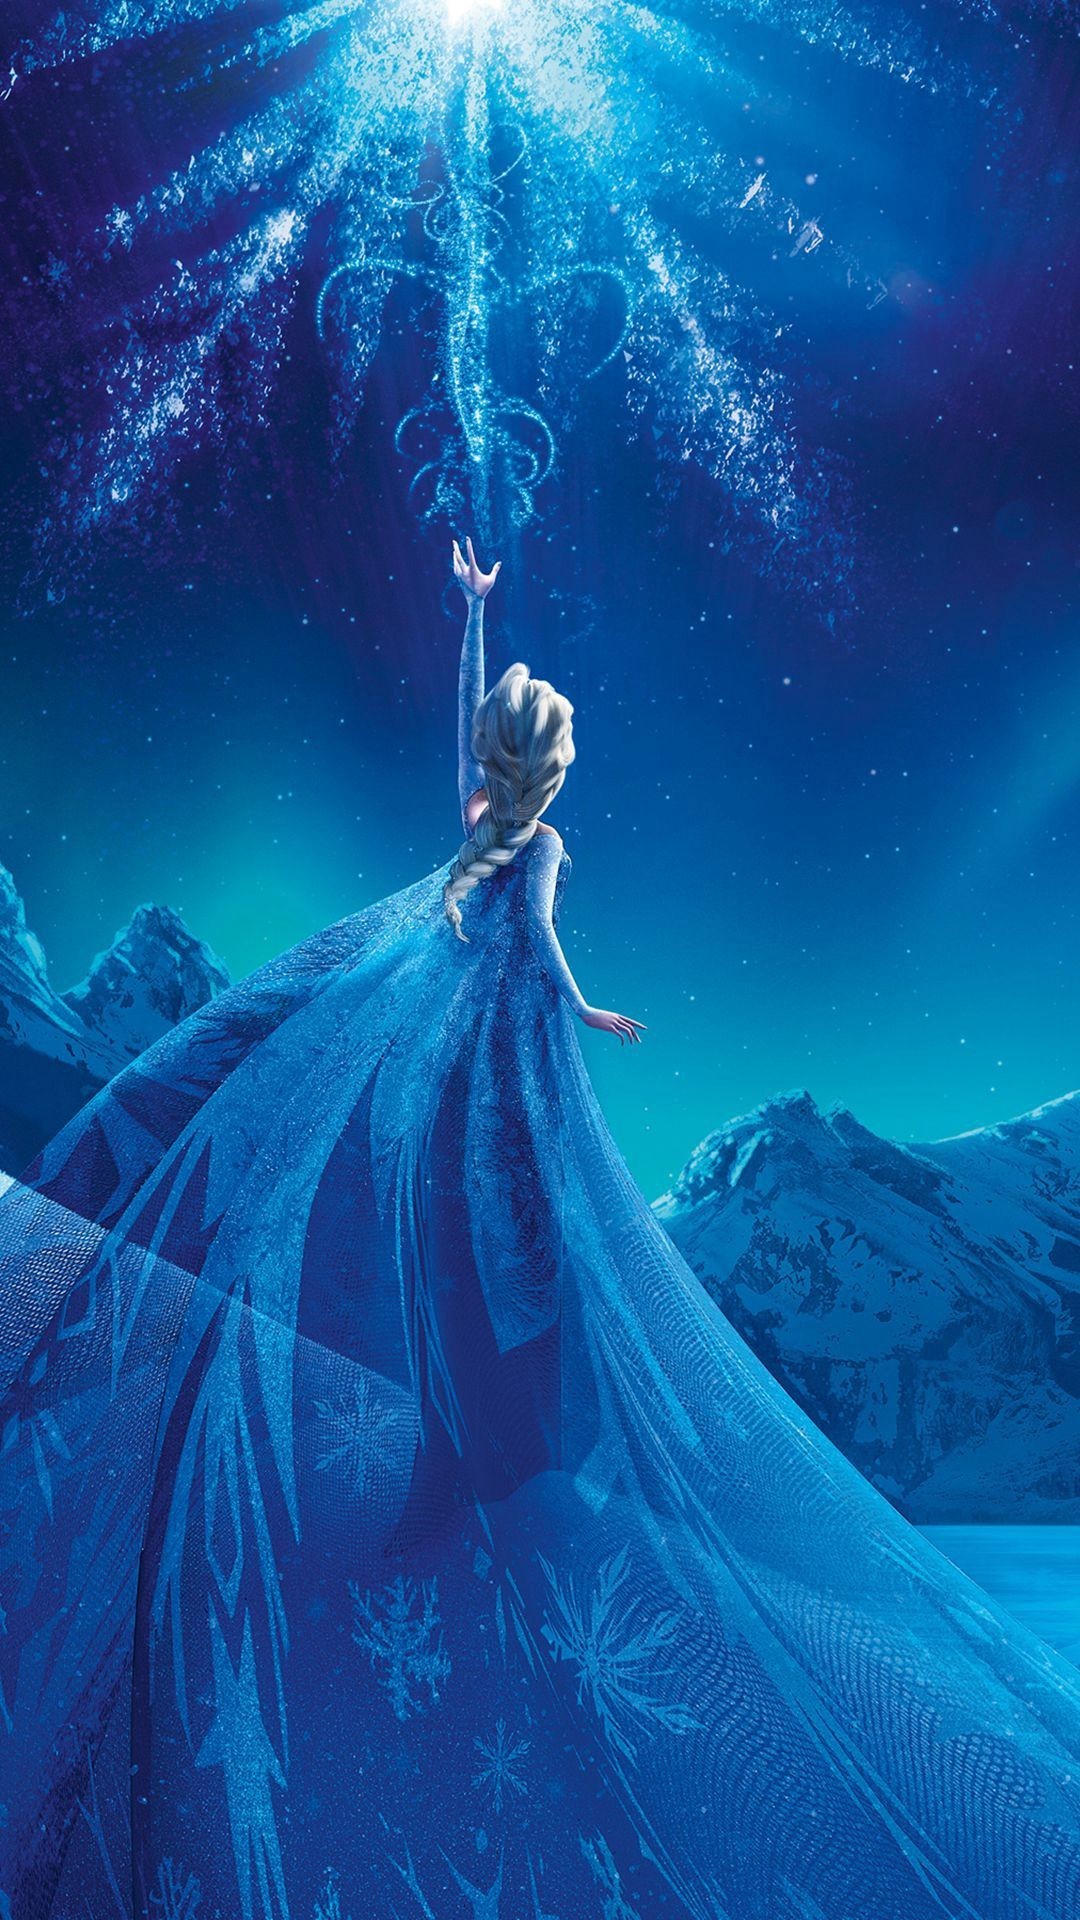 1080x1920 Magical Frozen Queen Elsa iPhone 6 Plus Wallpaper - 2014 Halloween  Snowflake Dress, Frozen World